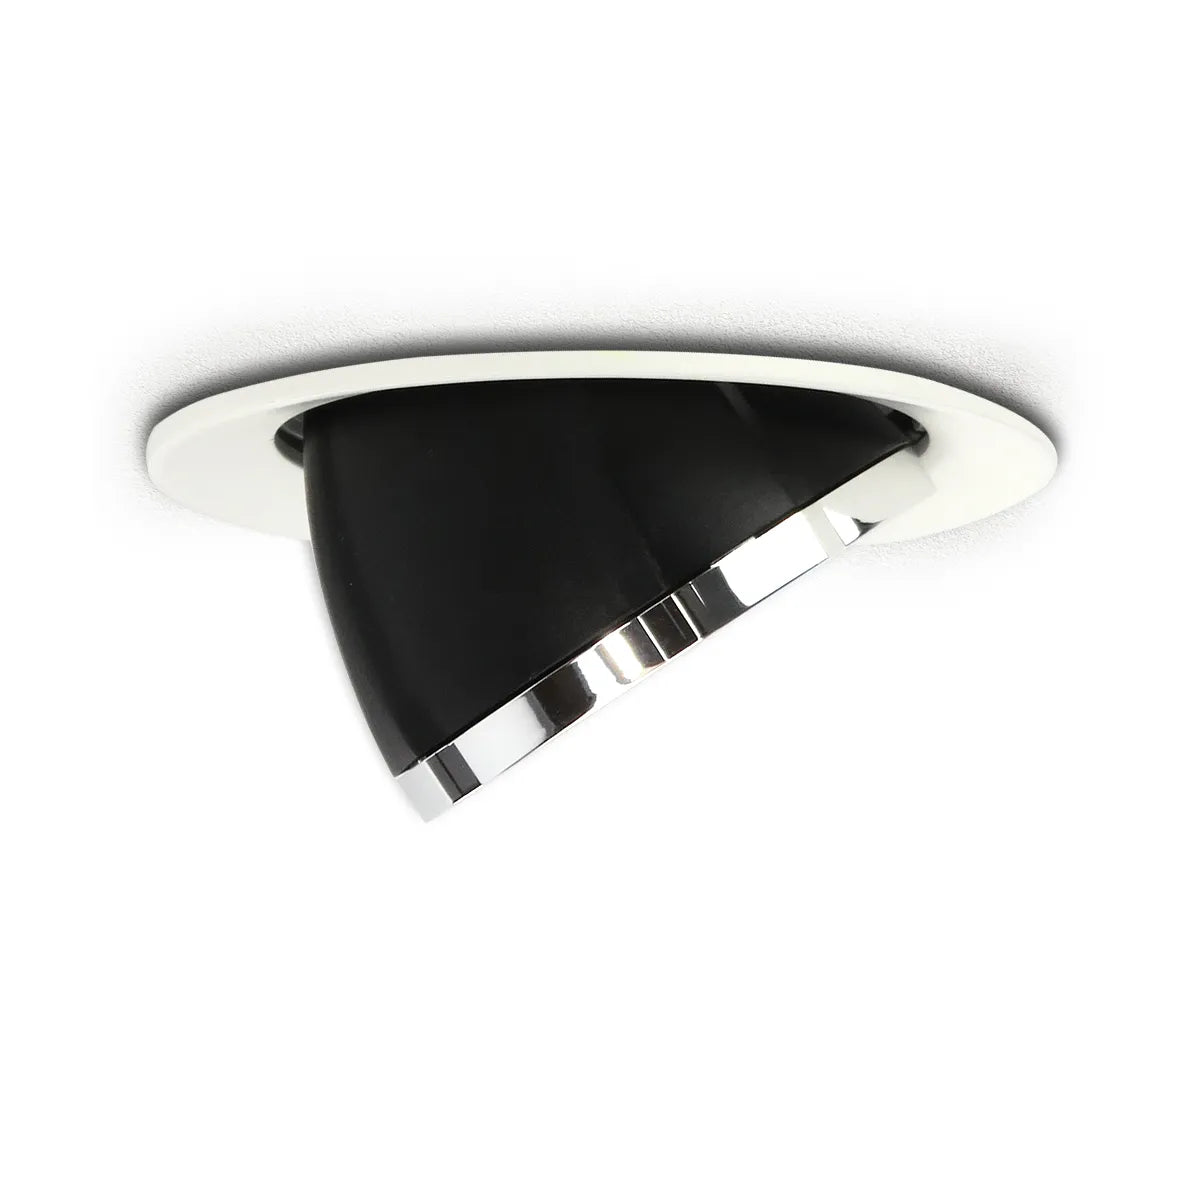 Gimbal LED recessed spotlight 10W ⌀140mm 90° tiltable 360° rotatable